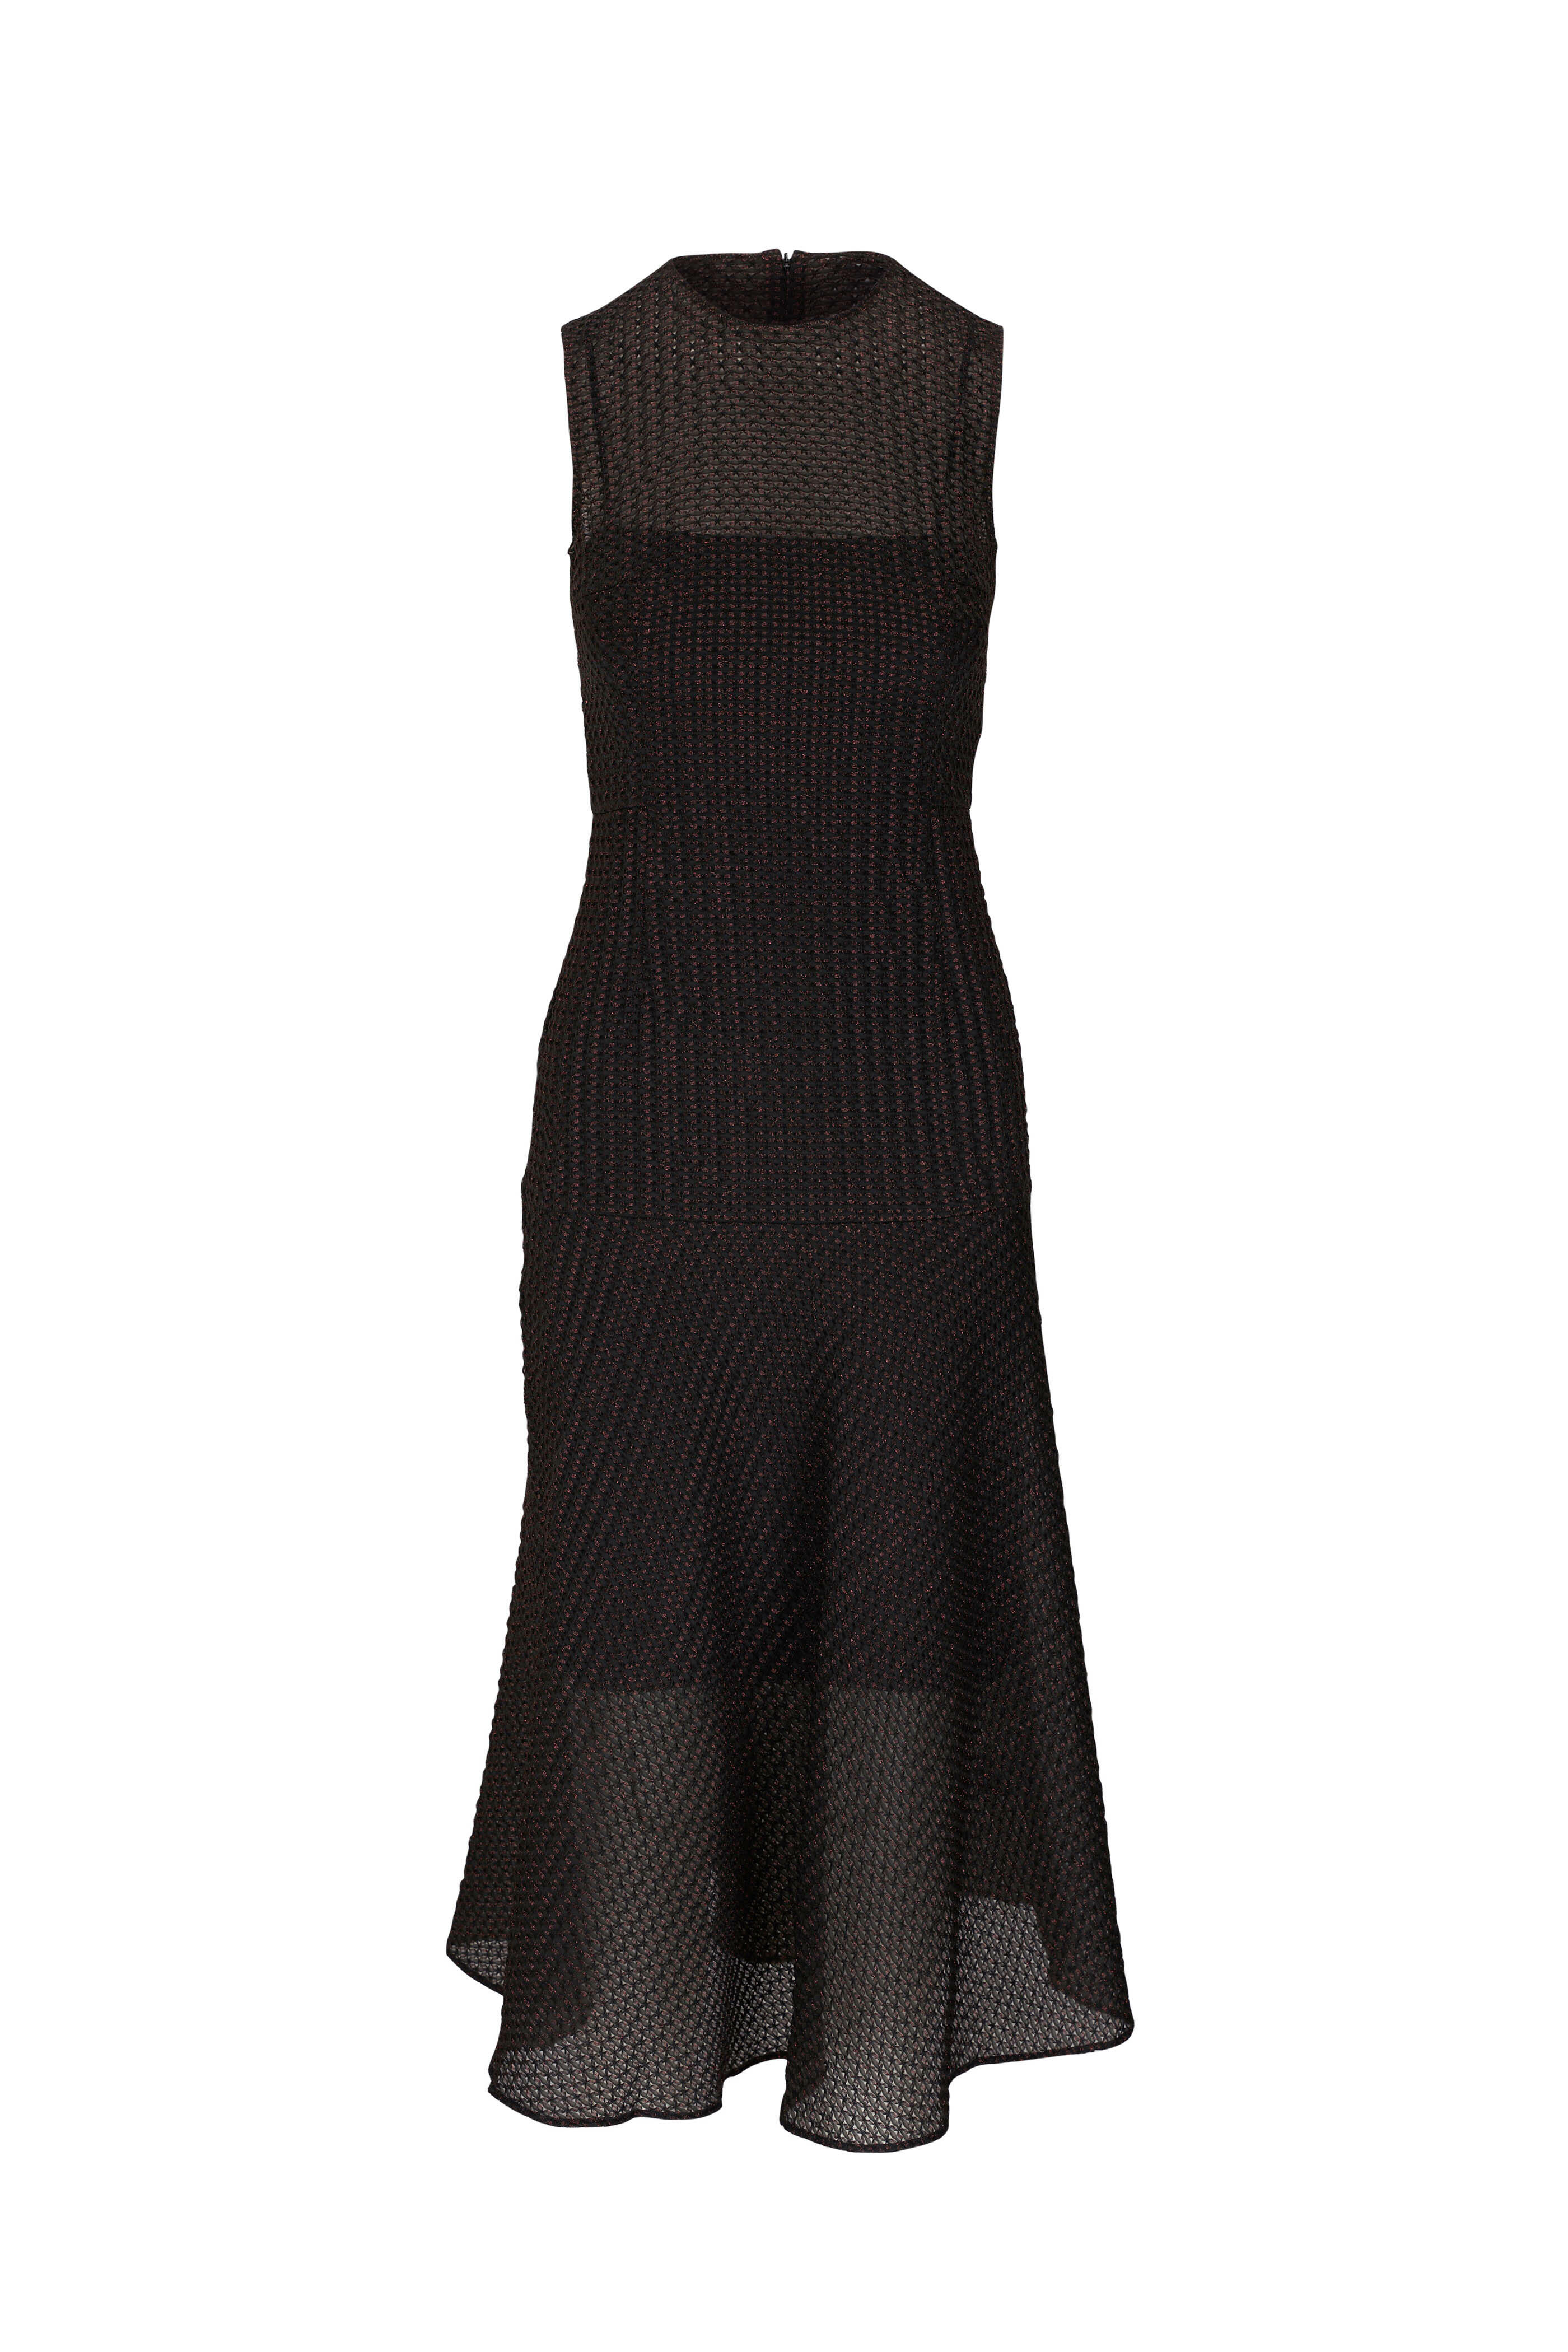 Akris Punto Circuit Board Print Midi Dress in Black